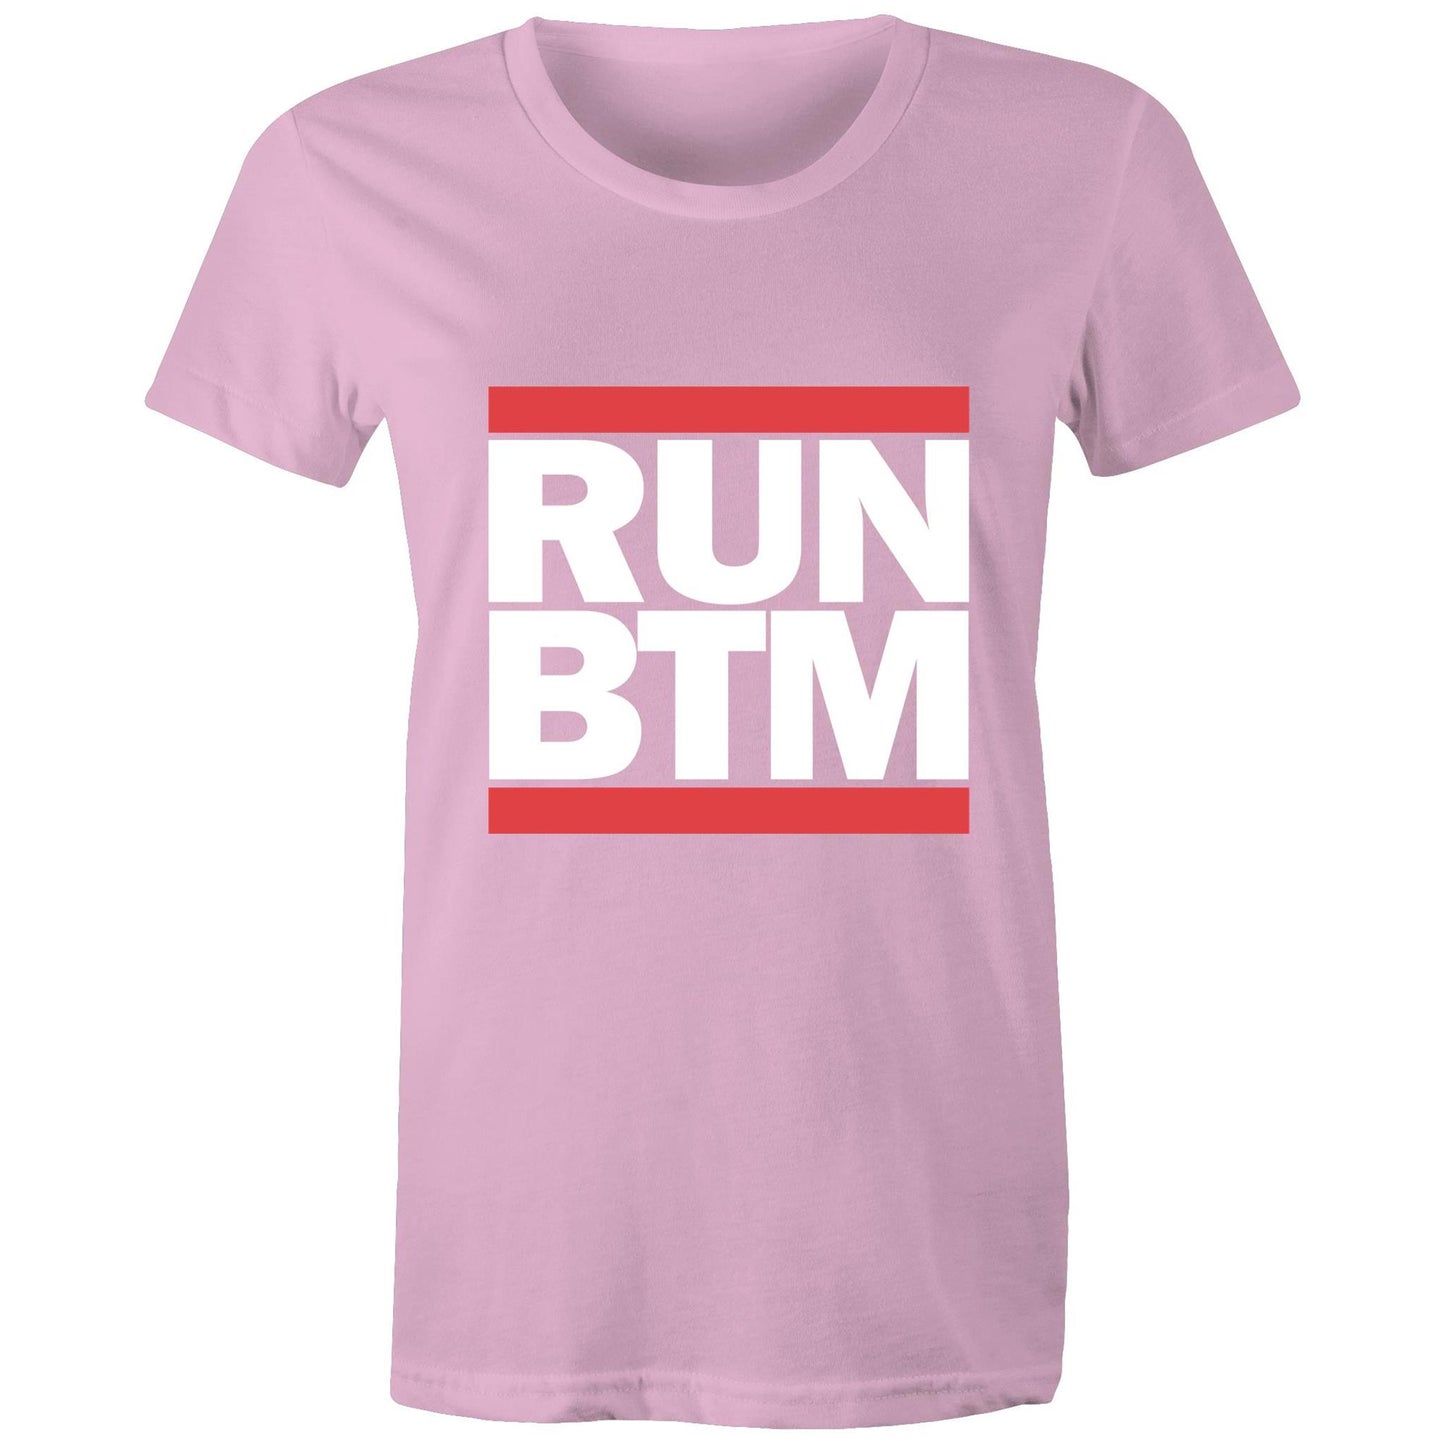 RUN BTM (White font) - Sportage Surf - Womens T-shirt